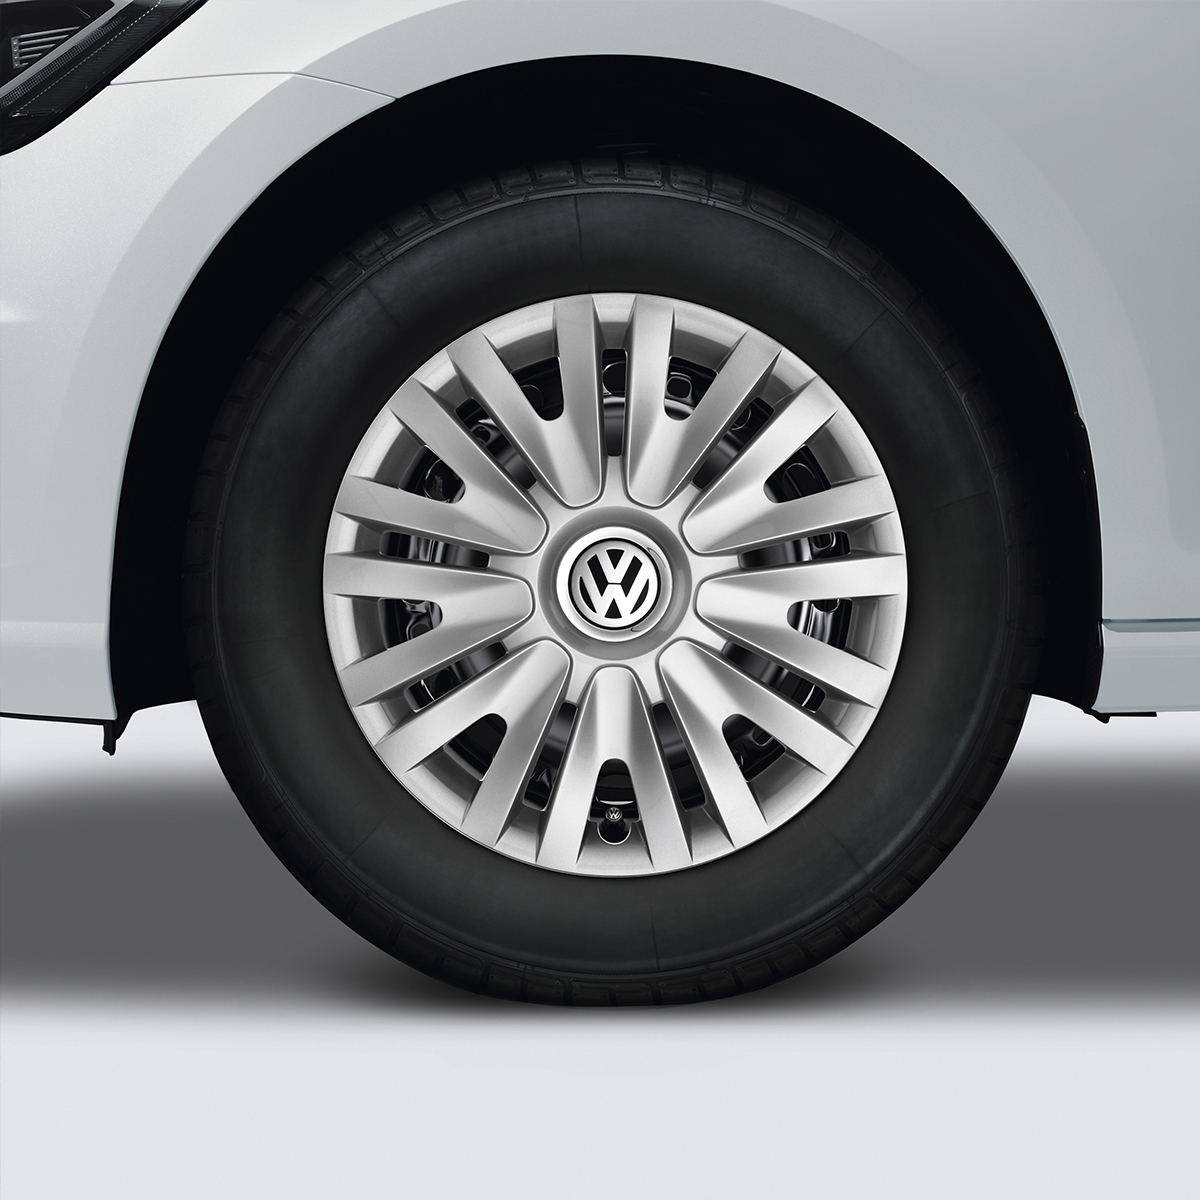 Колпак колеса поло. Колпаки r15 Volkswagen Polo. Колпаки на колеса r15 Volkswagen. 5na601025ac колпачки колес. Колесо Volkswagen 1600.